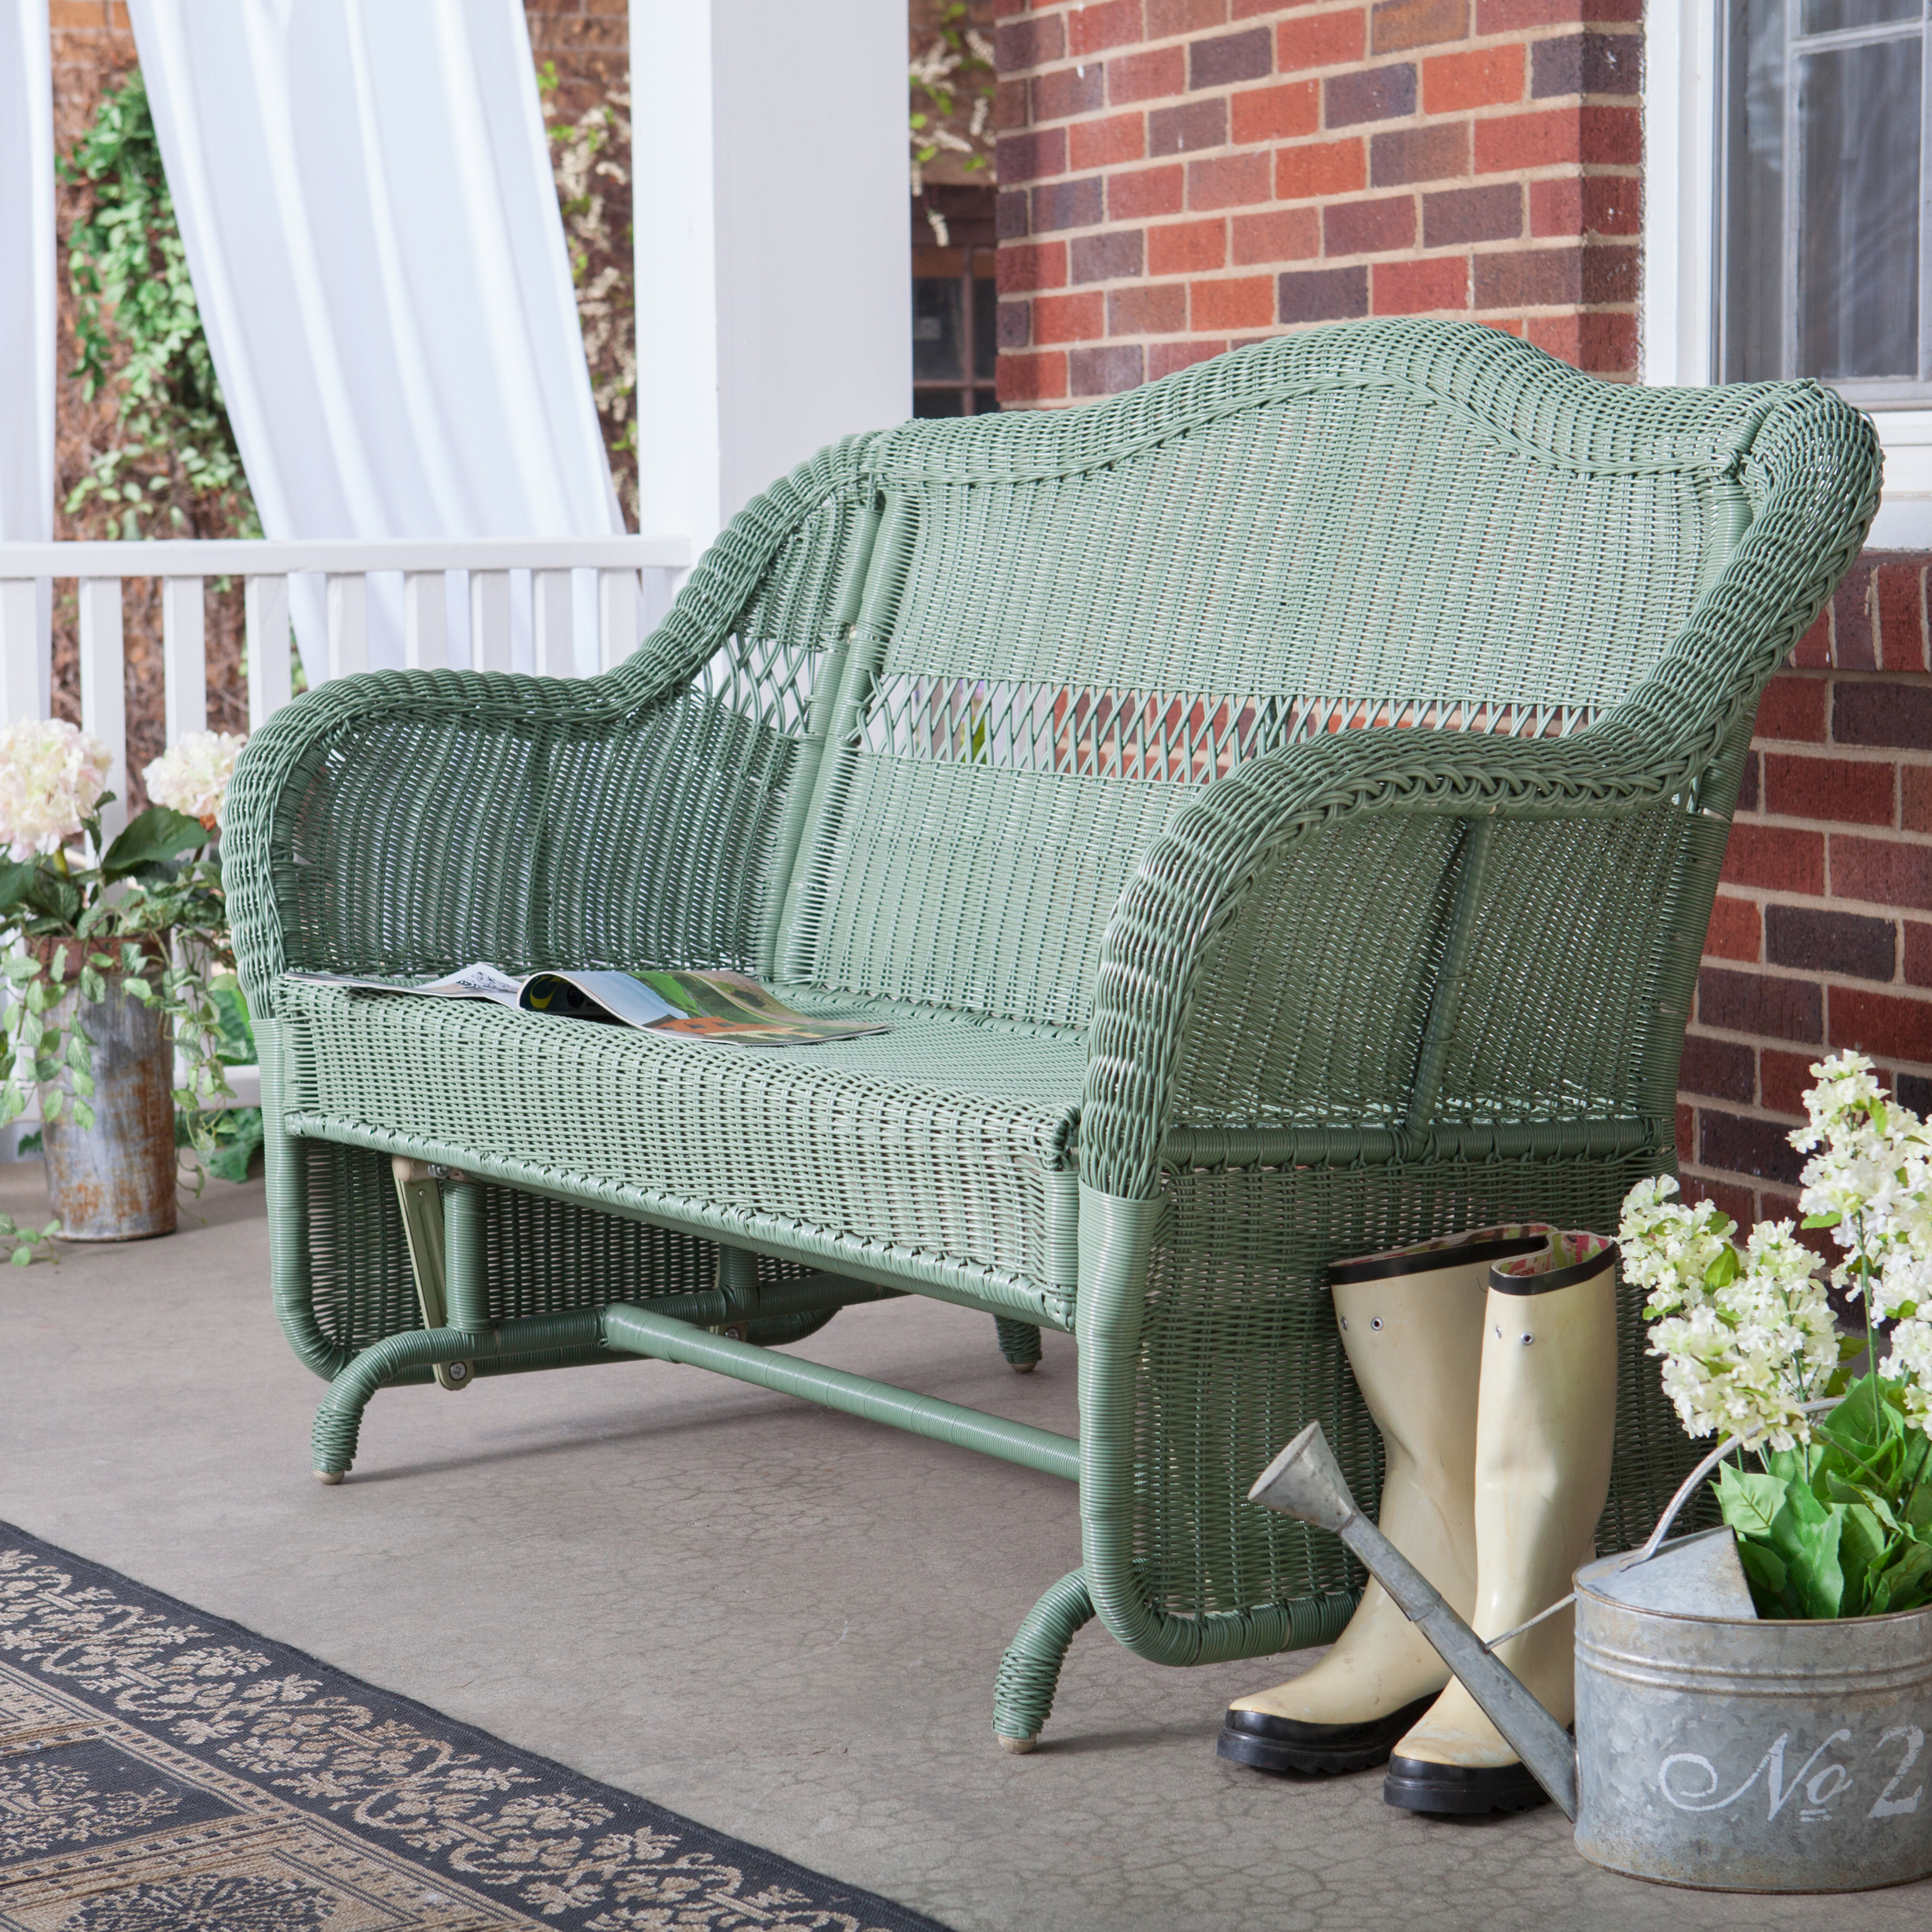 Wicker resin patio porch glider loveseat seat outdoor furniture